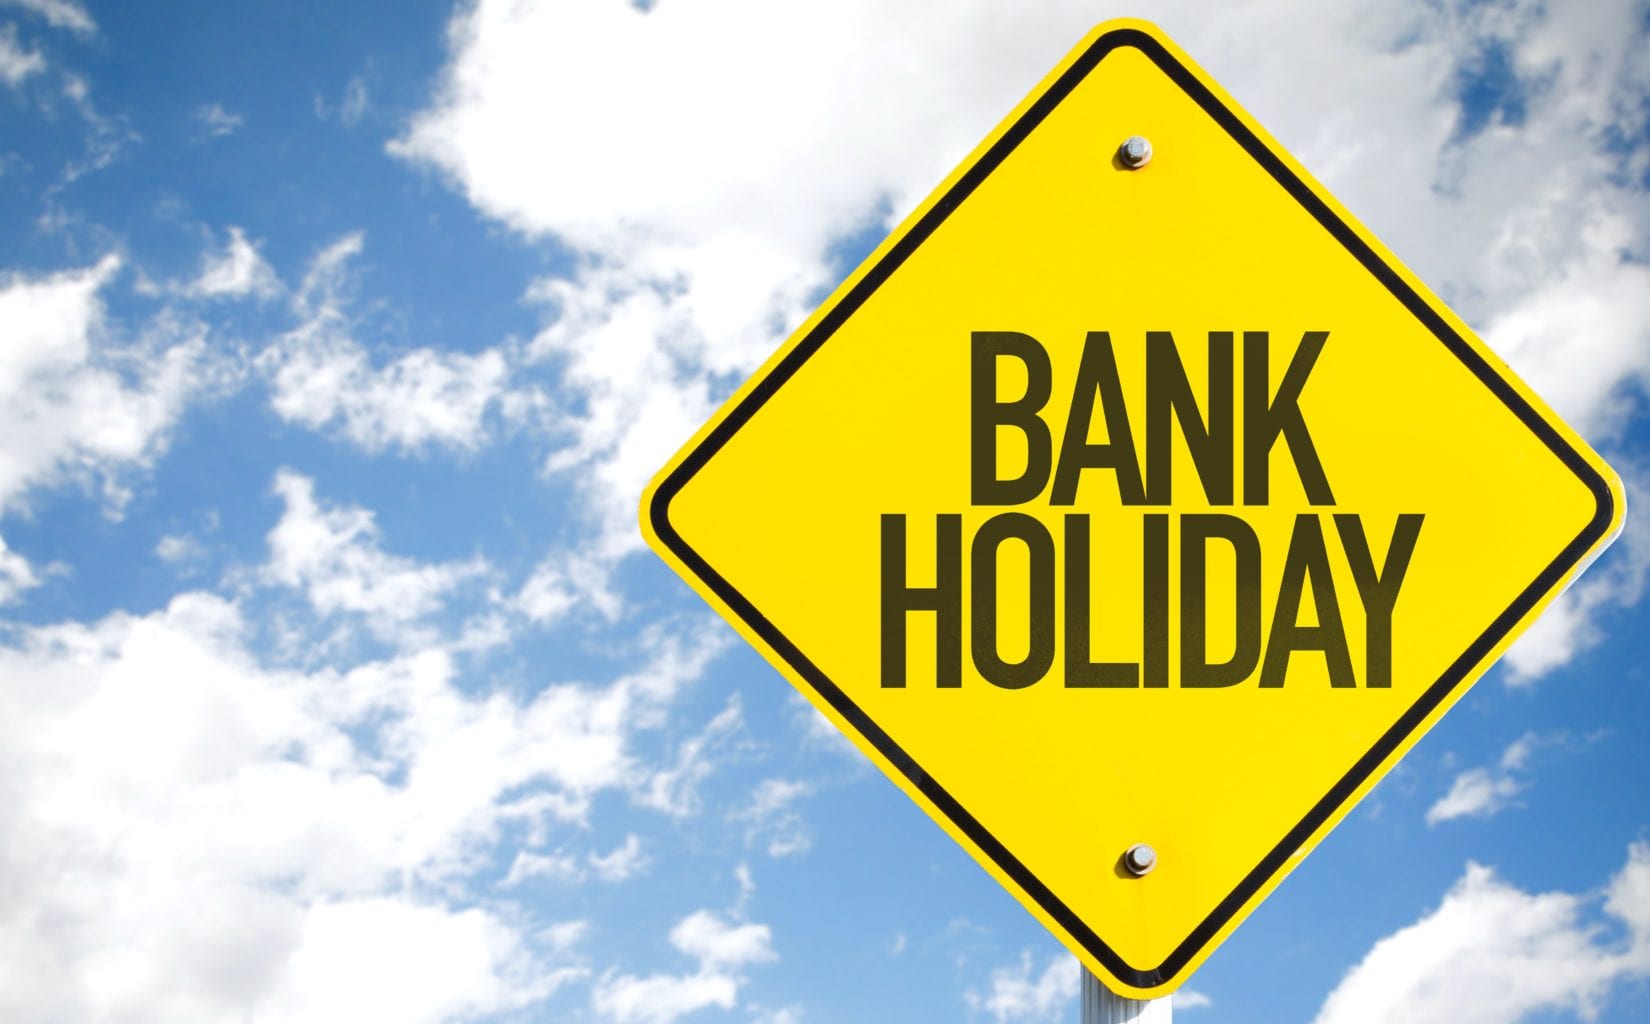 bank holiday trips away